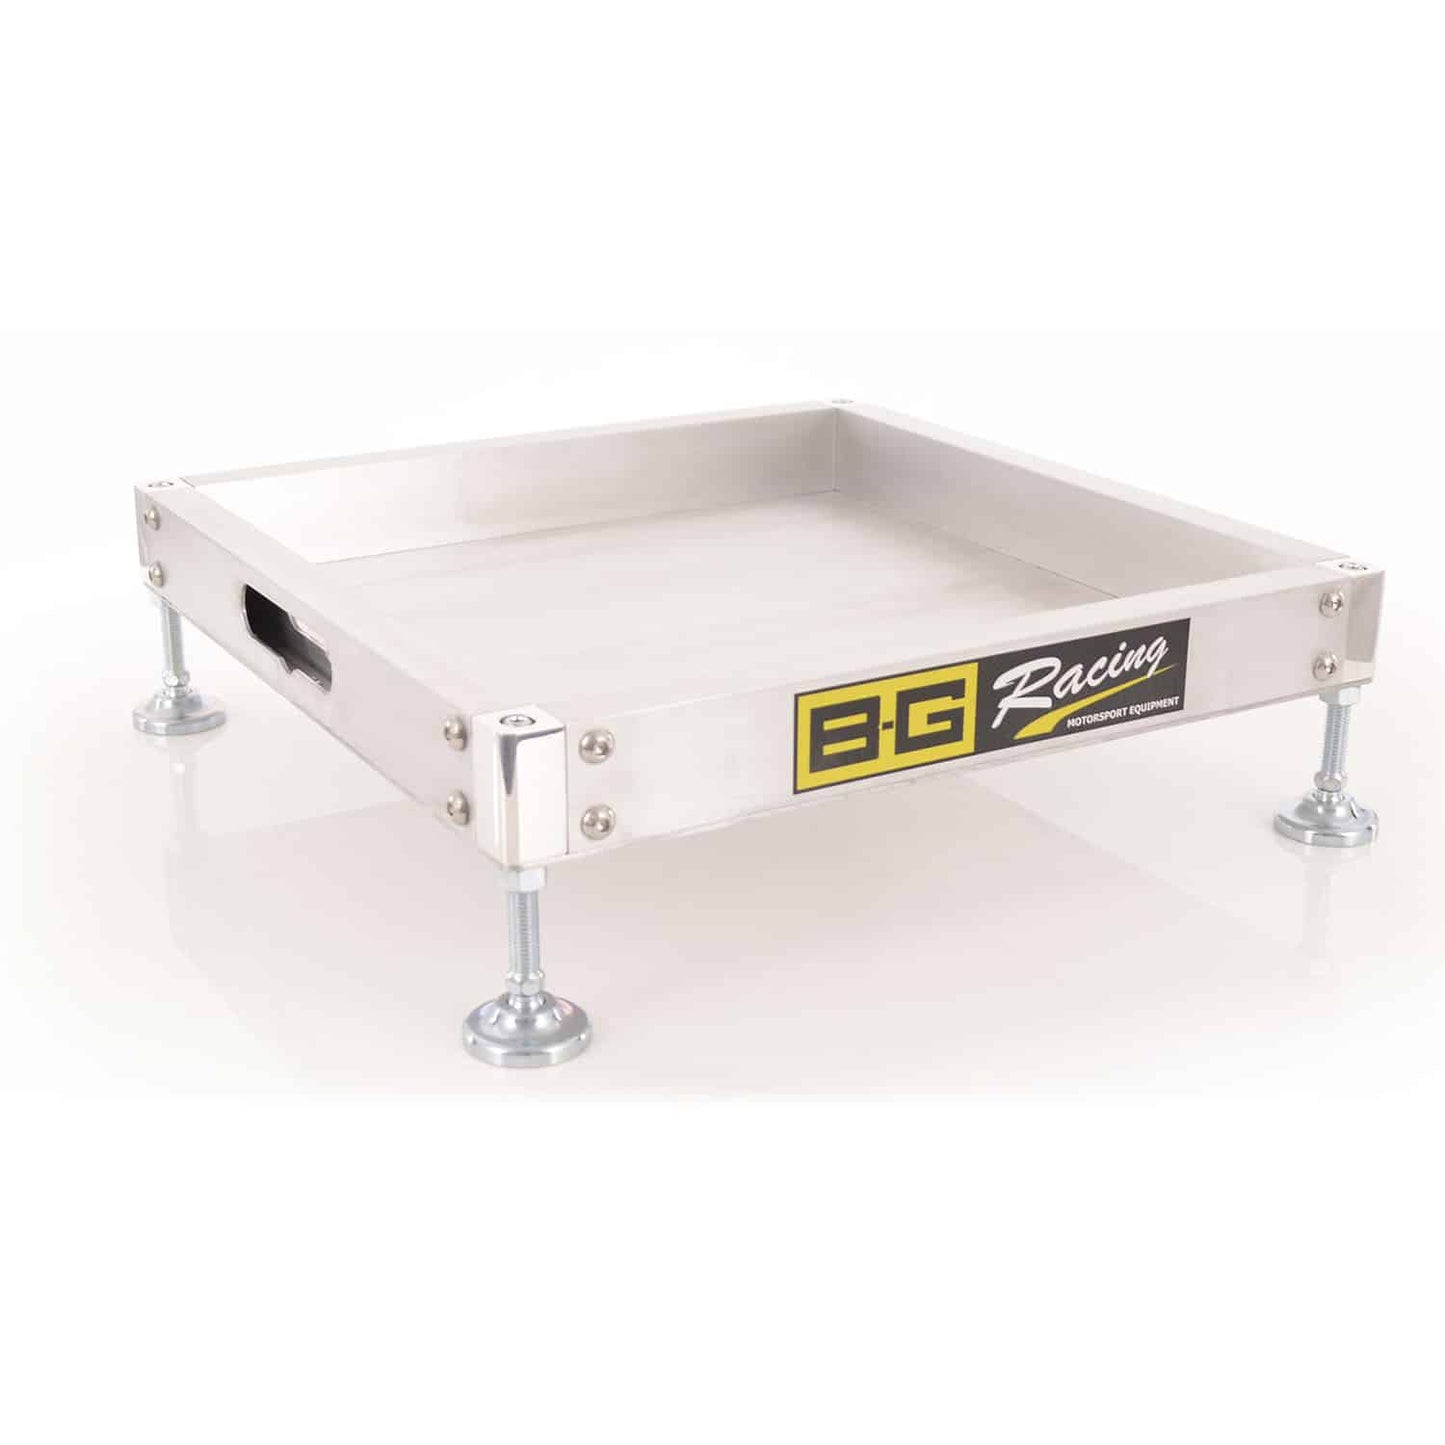 B-G Racing - Aluminium Scale Pad Levelling Trays